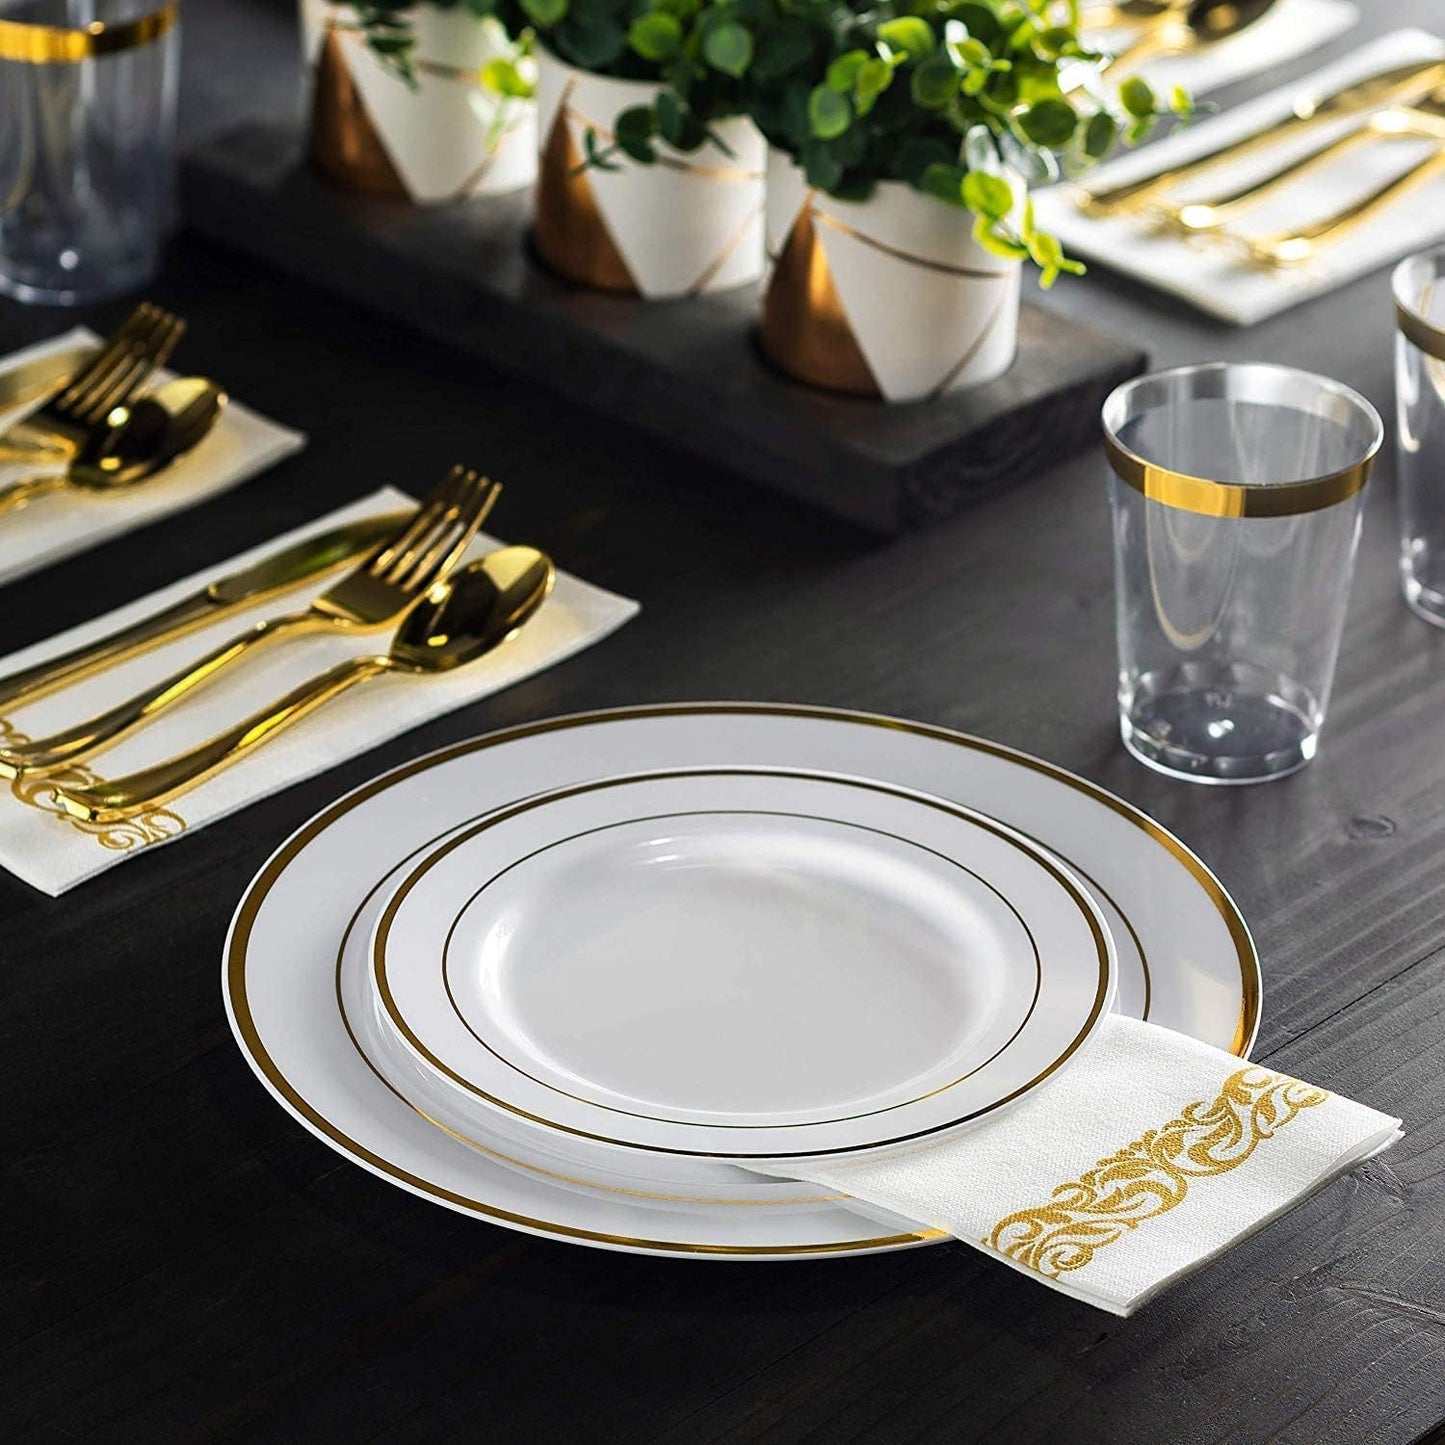 Munfix 100 Piece Plastic Party Plates White Gold Rim, Premium 10.25 Inch Dinner Elegant Fancy Heavy Duty Disposable Wedding Plates